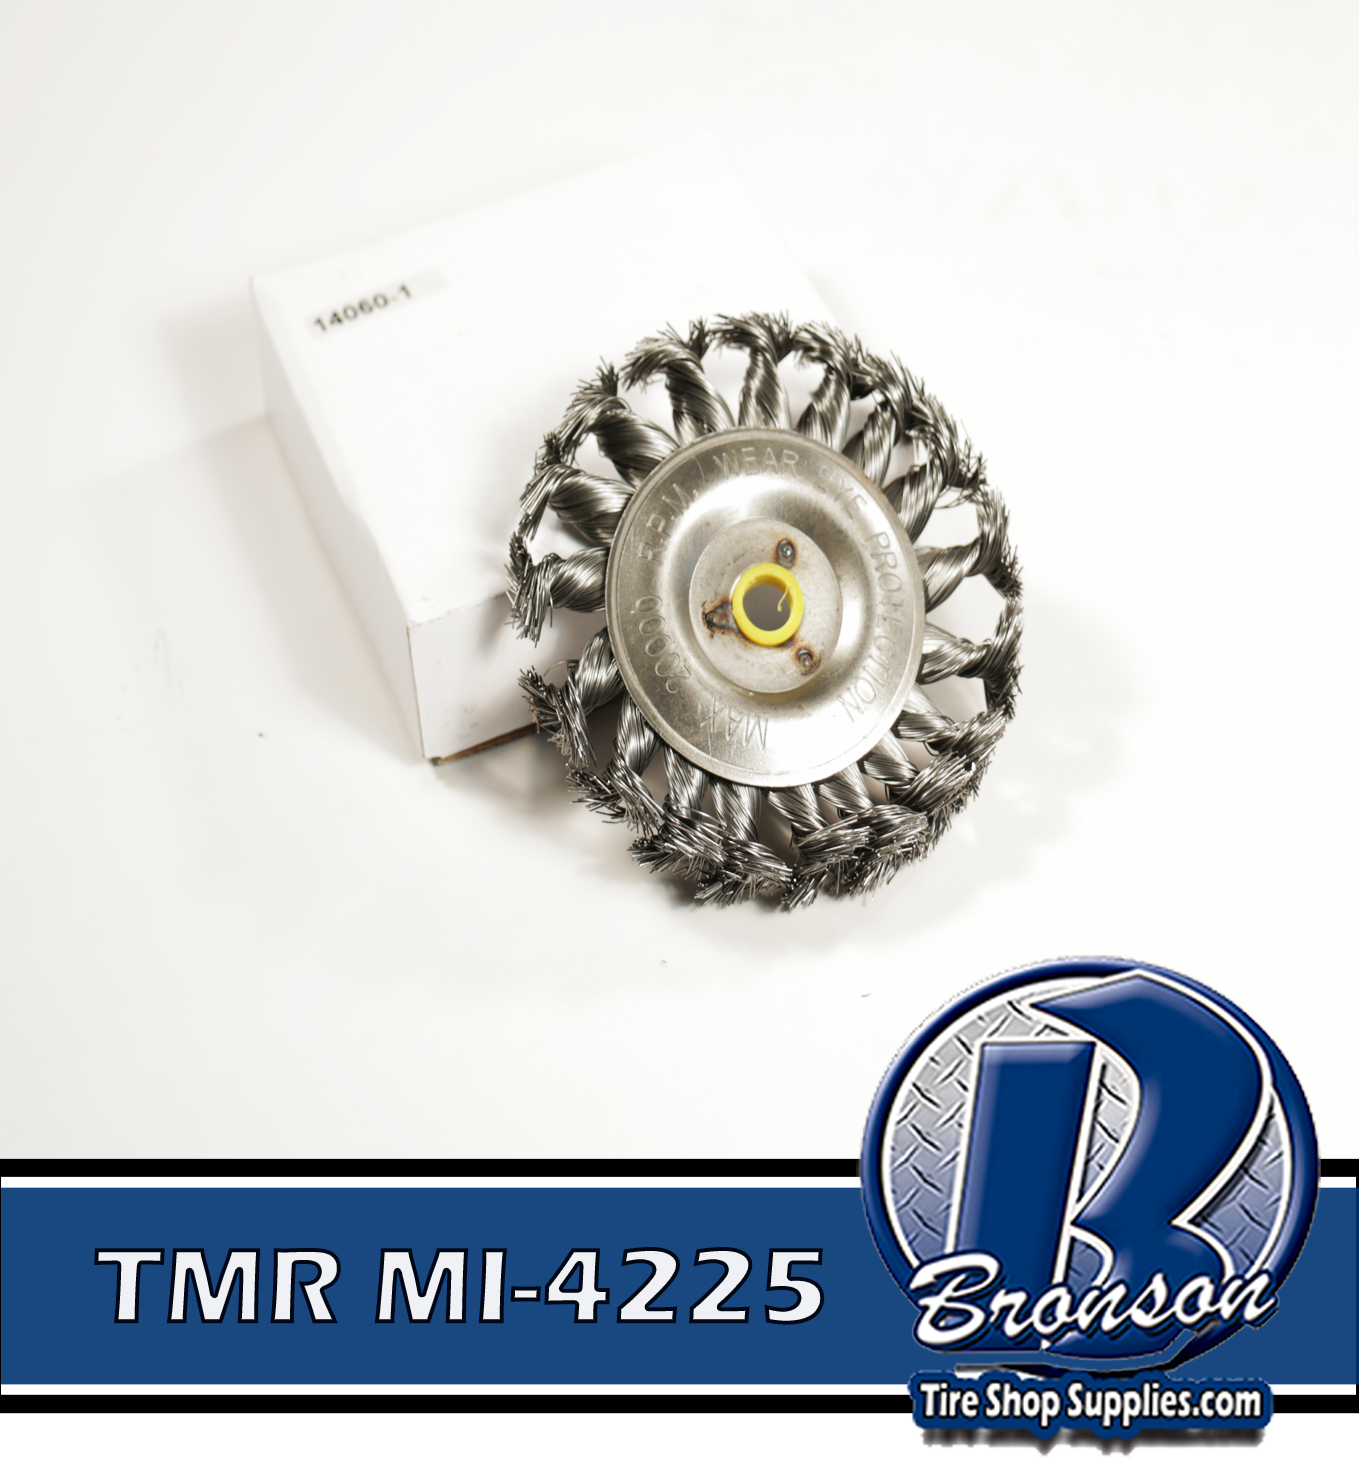 TMR MI-4225 4' TWISTED WI